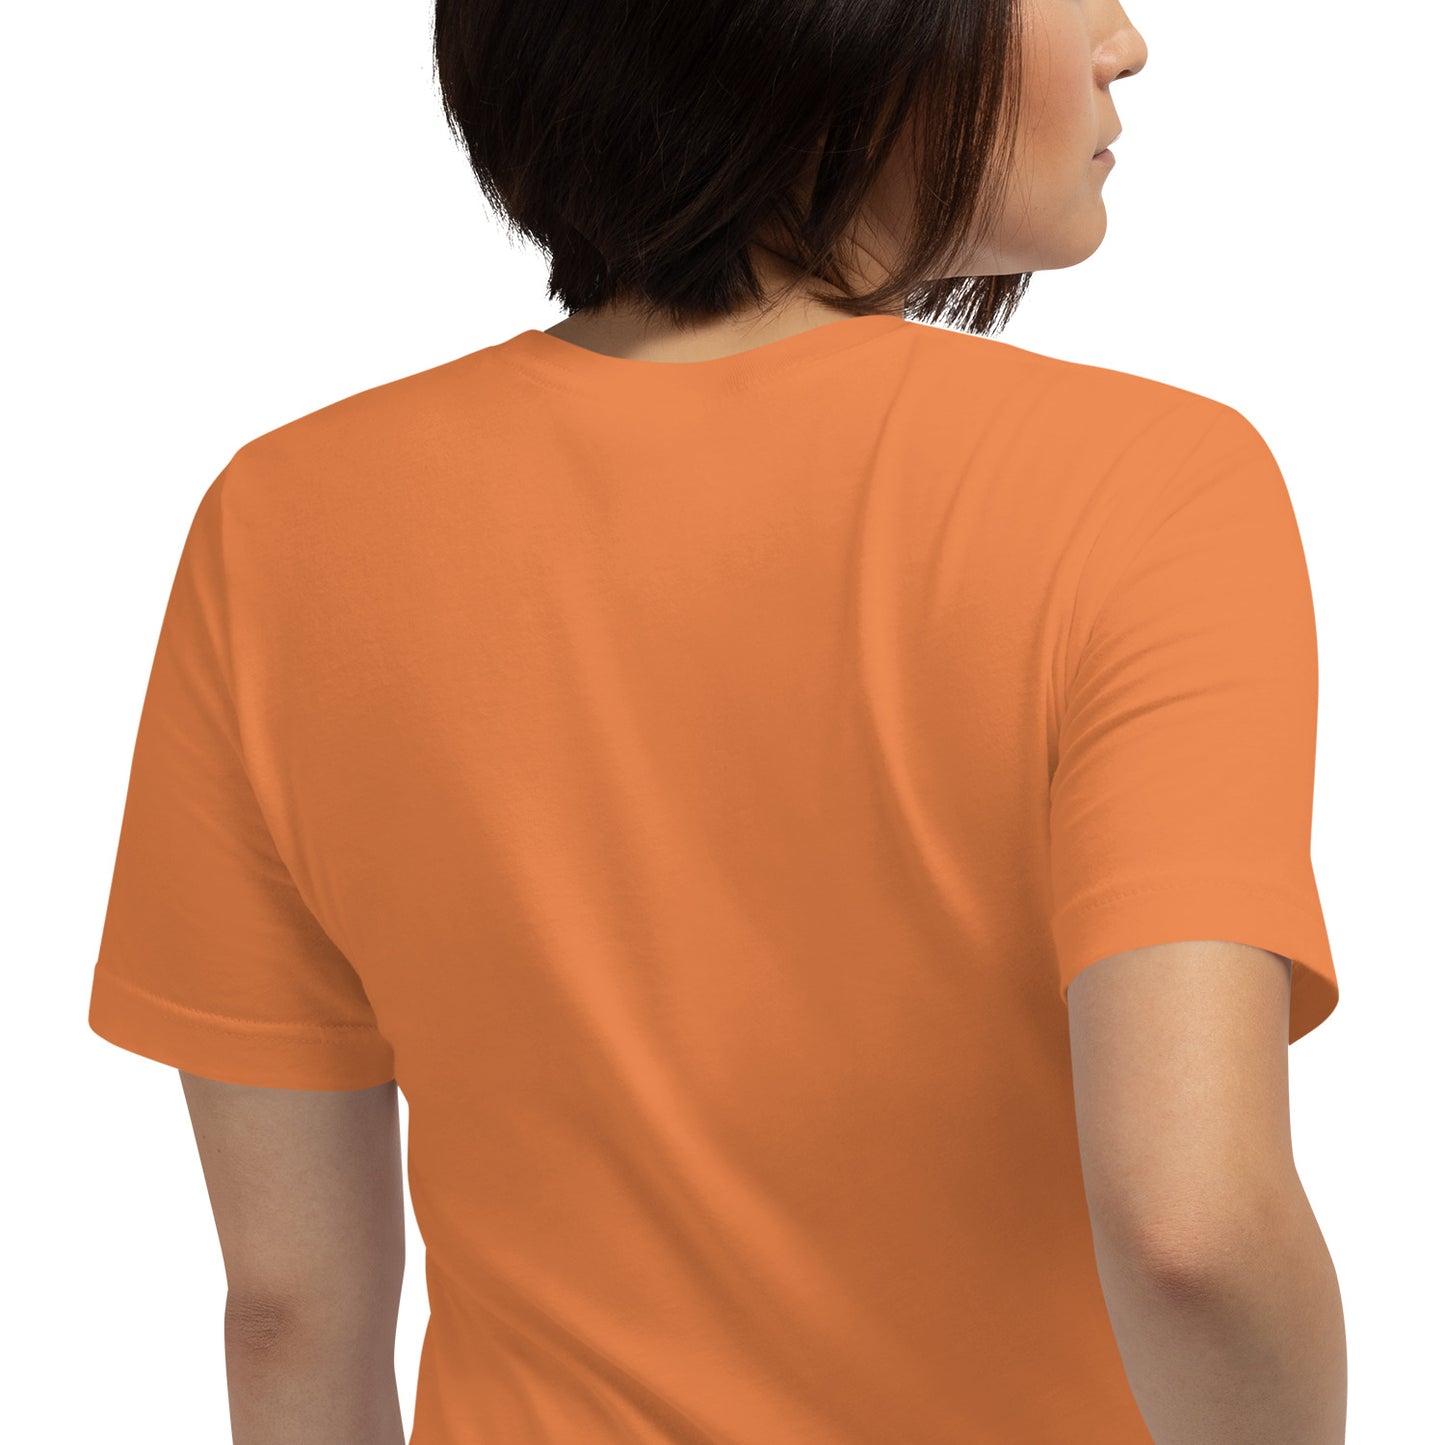 Colors Of The Netherlands Shirt / Holland Dutch Flag Shirt / Humor Shirt